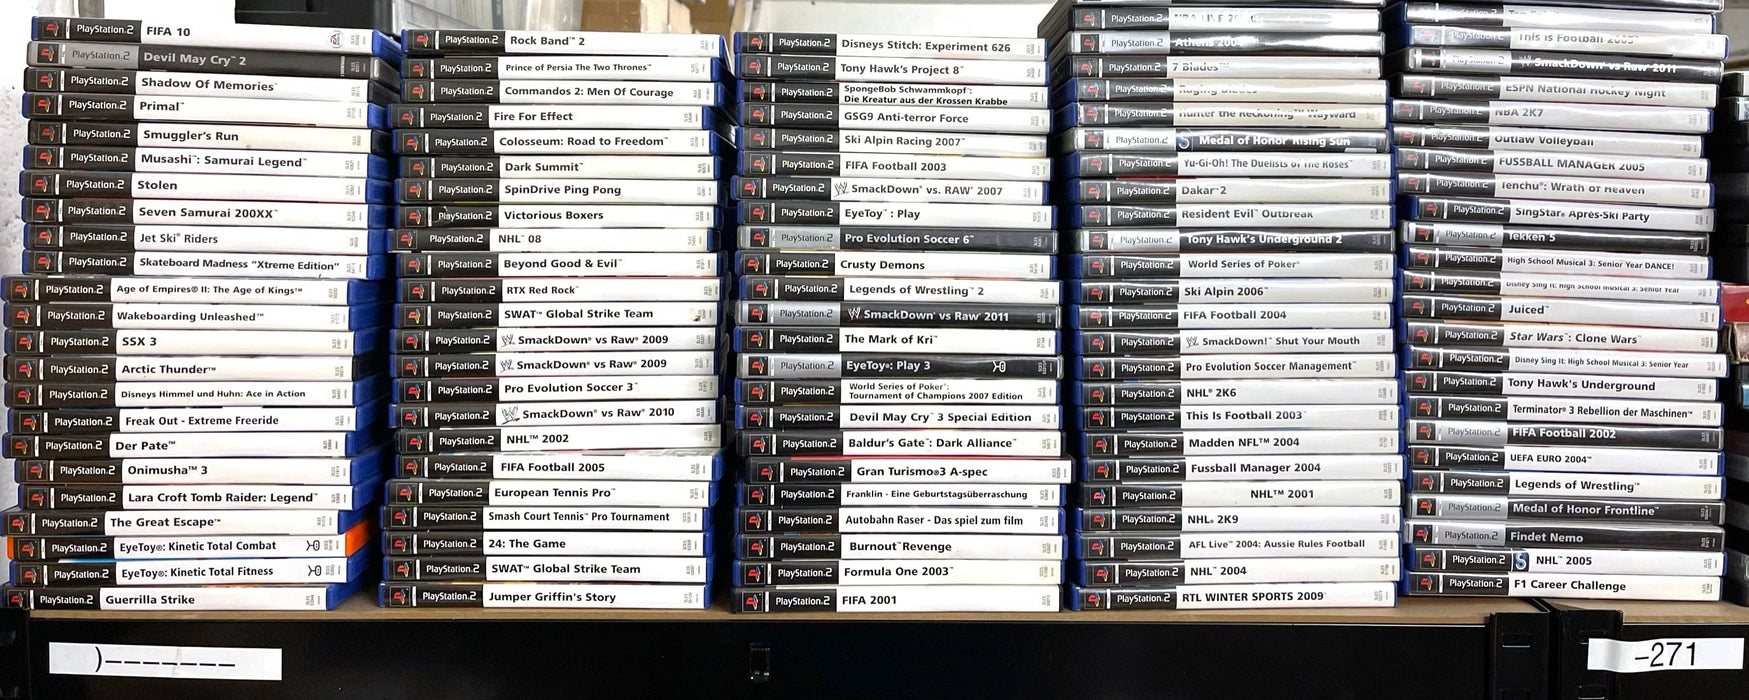 Glaciergames PlayStation 2 Game Der Herr der Ringe: Die zwei Türme PlayStation 2 (Nr.1026)